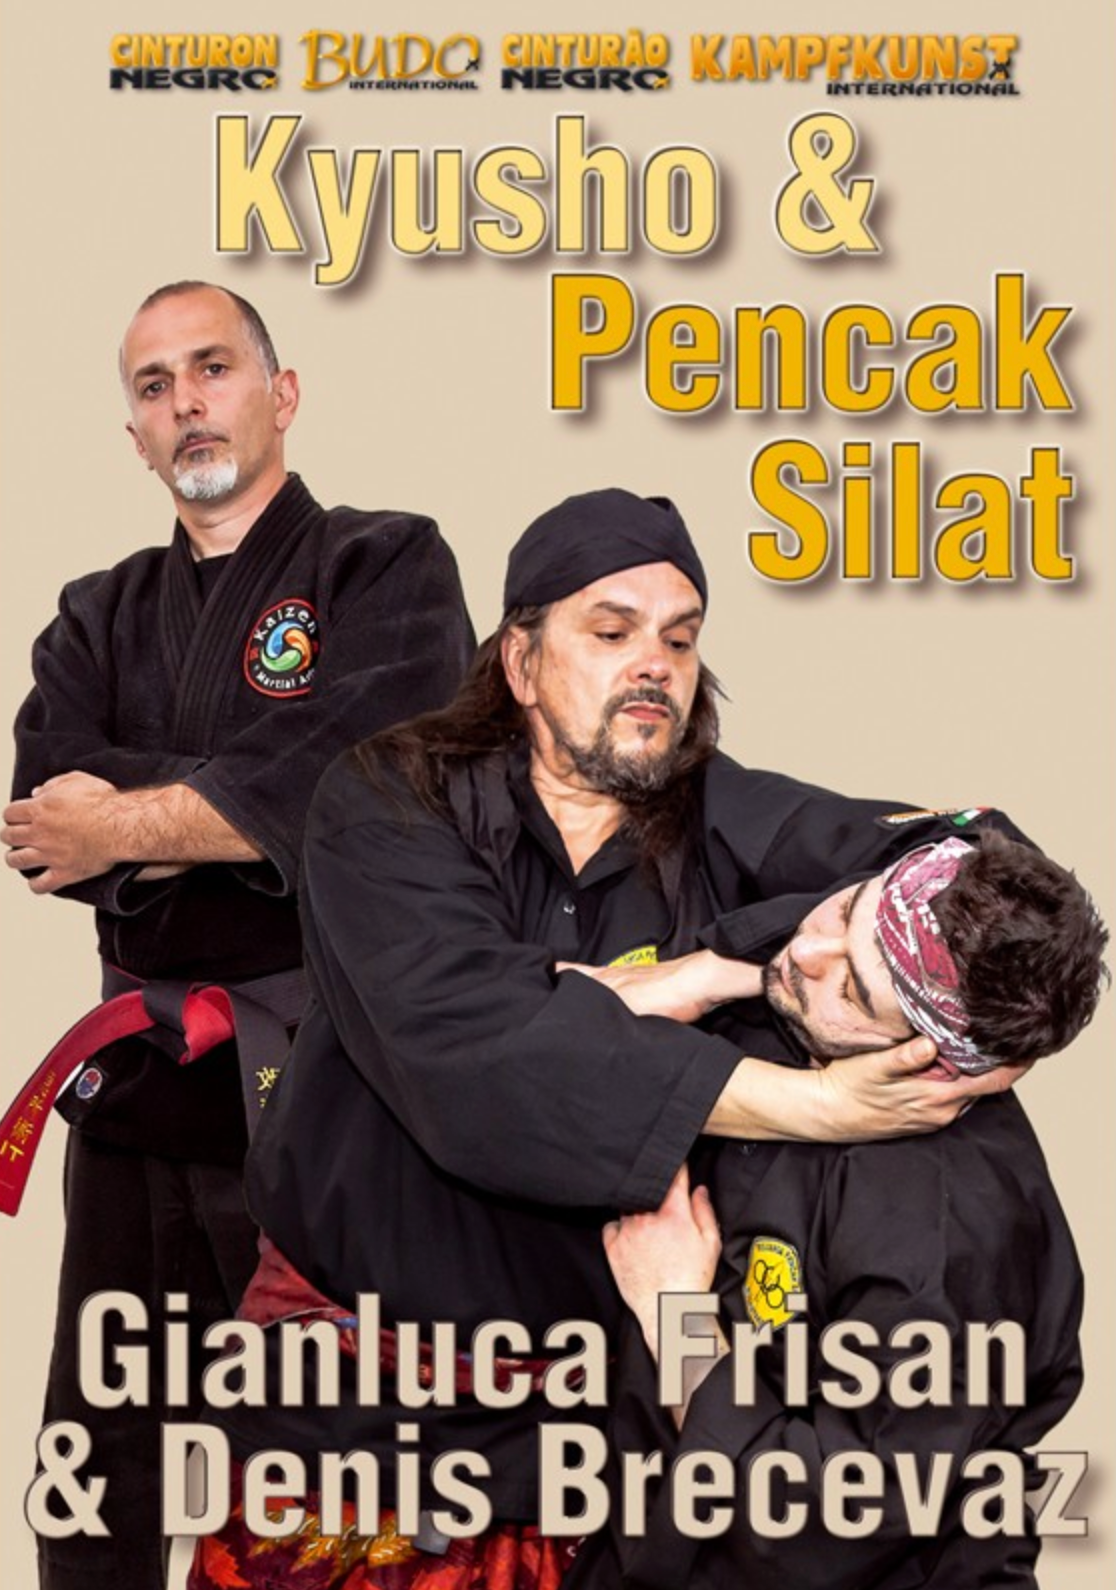 Kyusho & Pencak Silat DVD 3 by Gianluca Frisan & Denis Brecevaz - Budovideos Inc